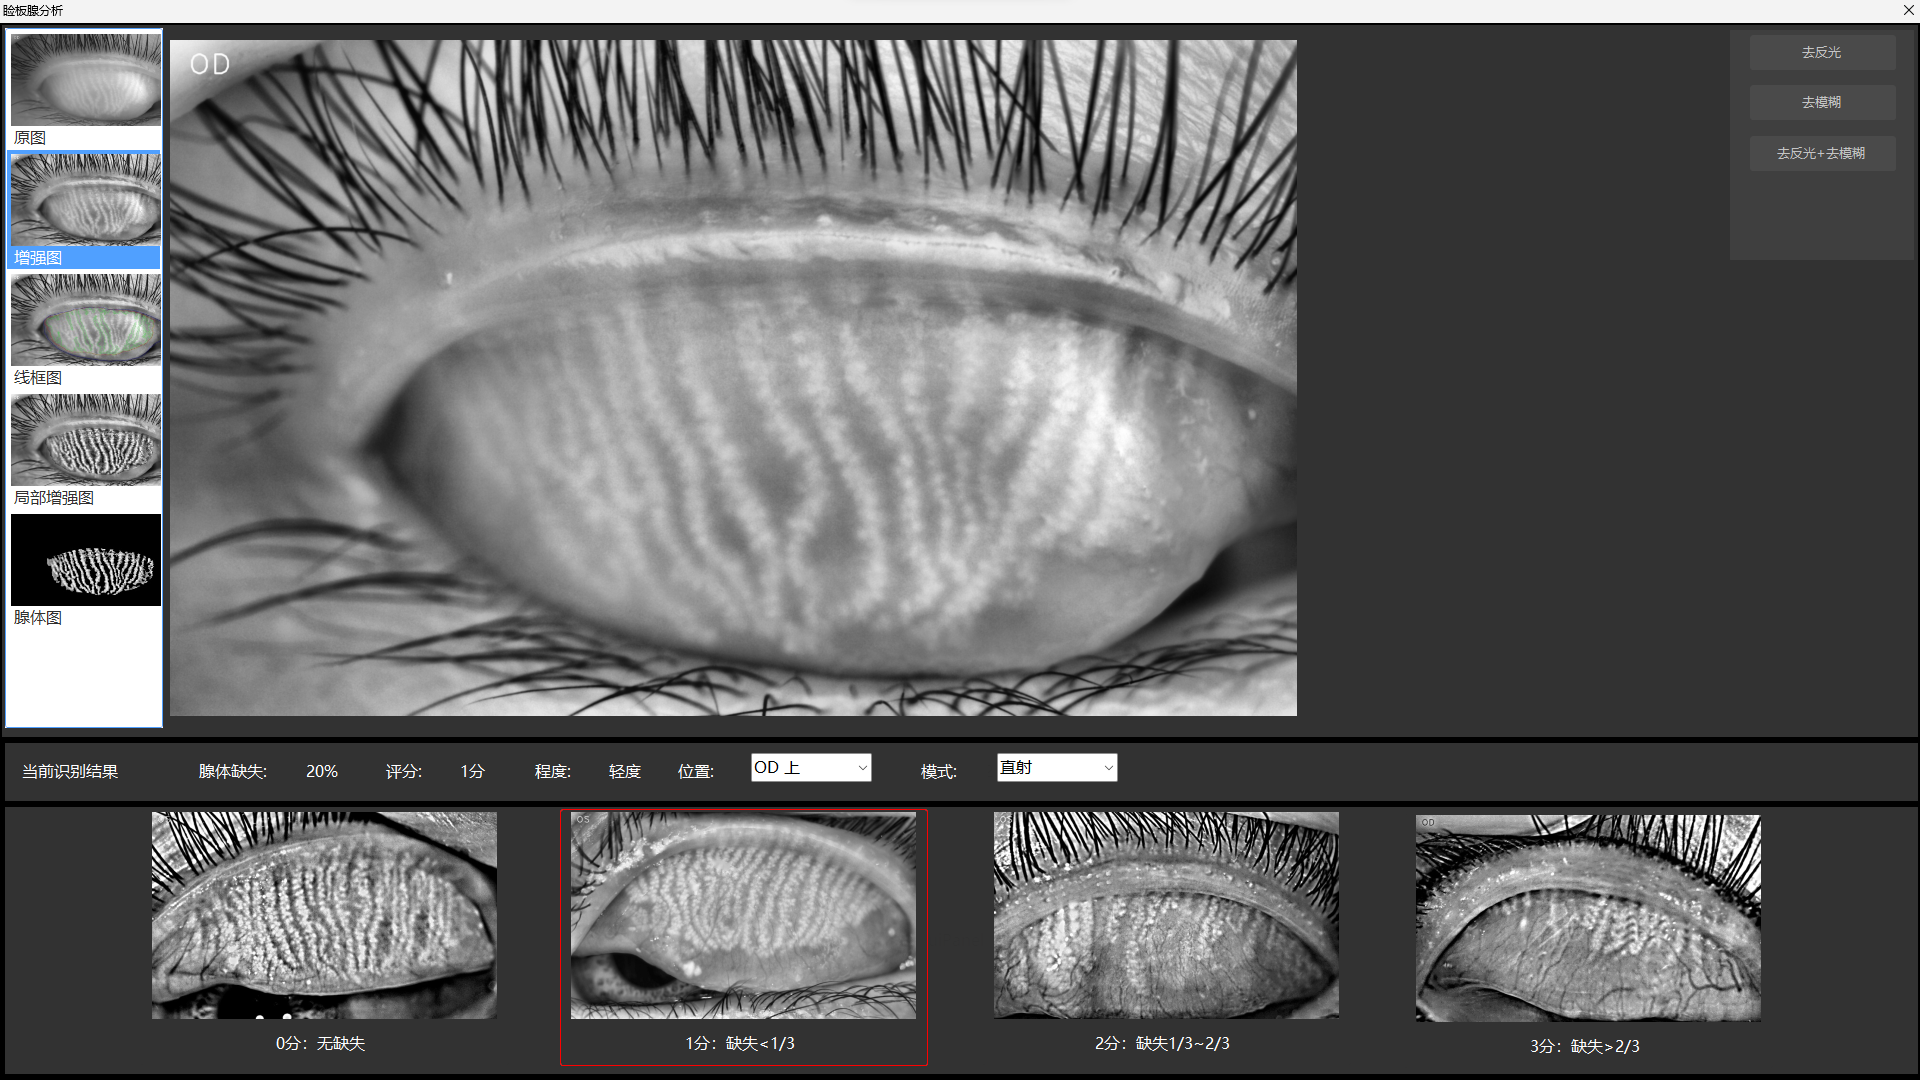 EYESIS干眼综合检查仪的的睑板腺结构成像检查